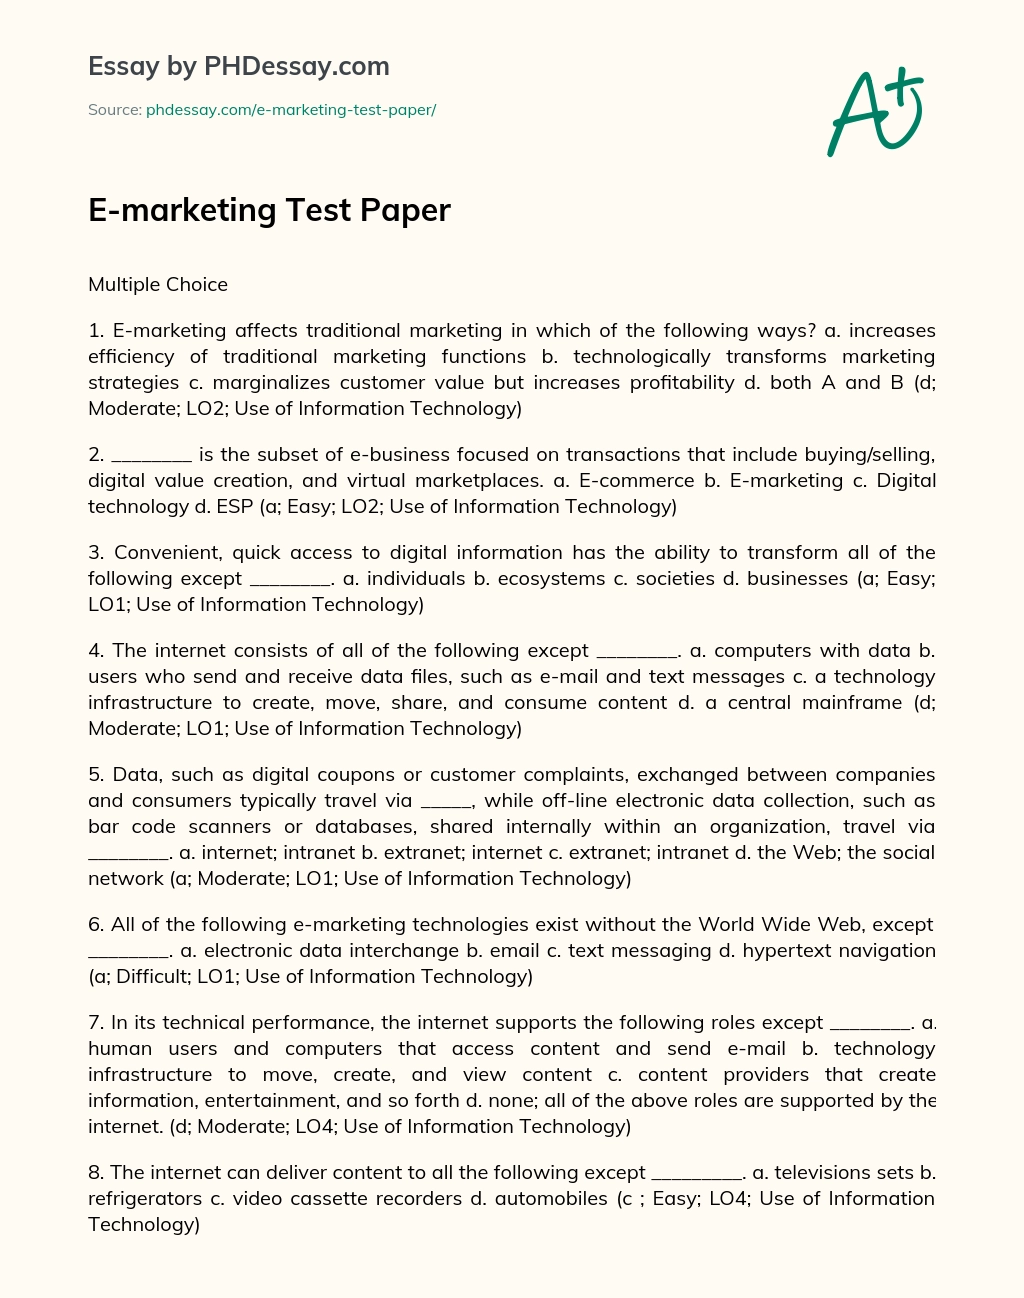 E-marketing Test Paper essay